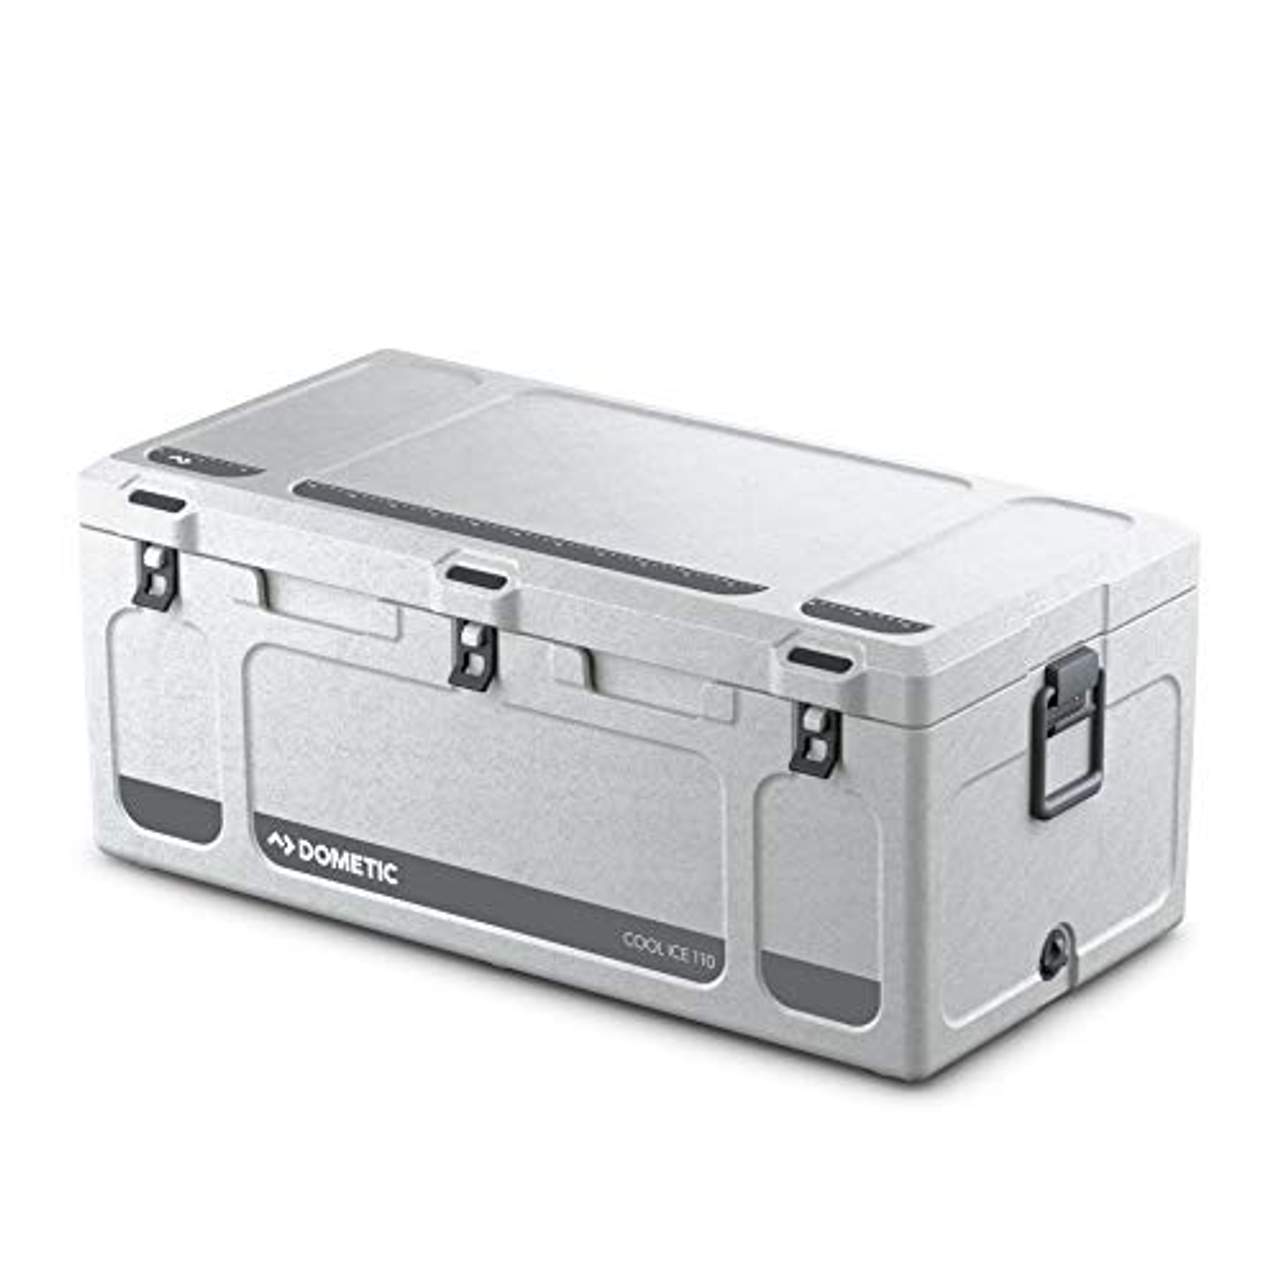 DOMETIC Cool-Ice CI 110 tragbare Passiv-Kühlbox